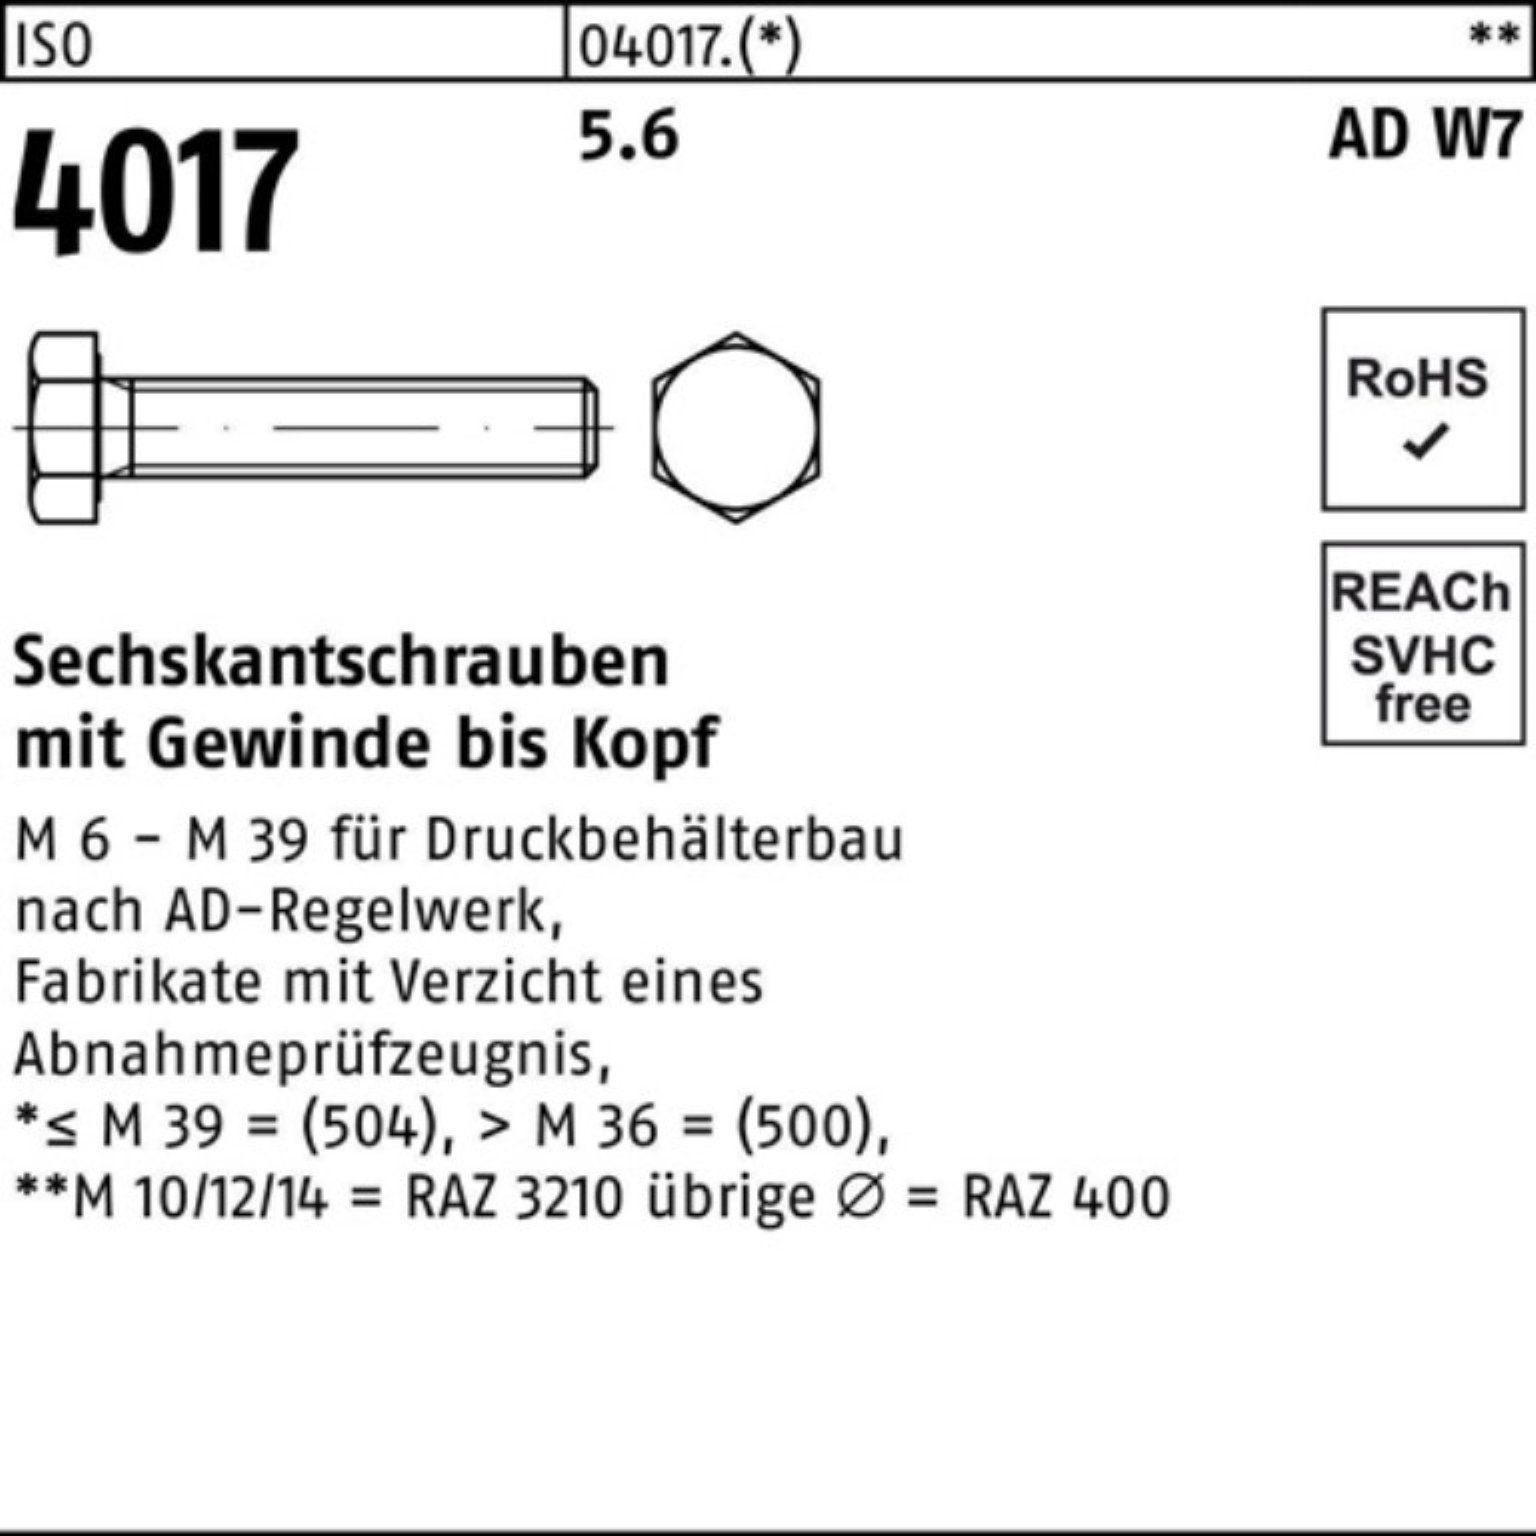 Bufab Sechskantschraube 5.6 Pack 40 VG Sechskantschraube 100er W7 I 50 ISO M16x AD 4017 Stück